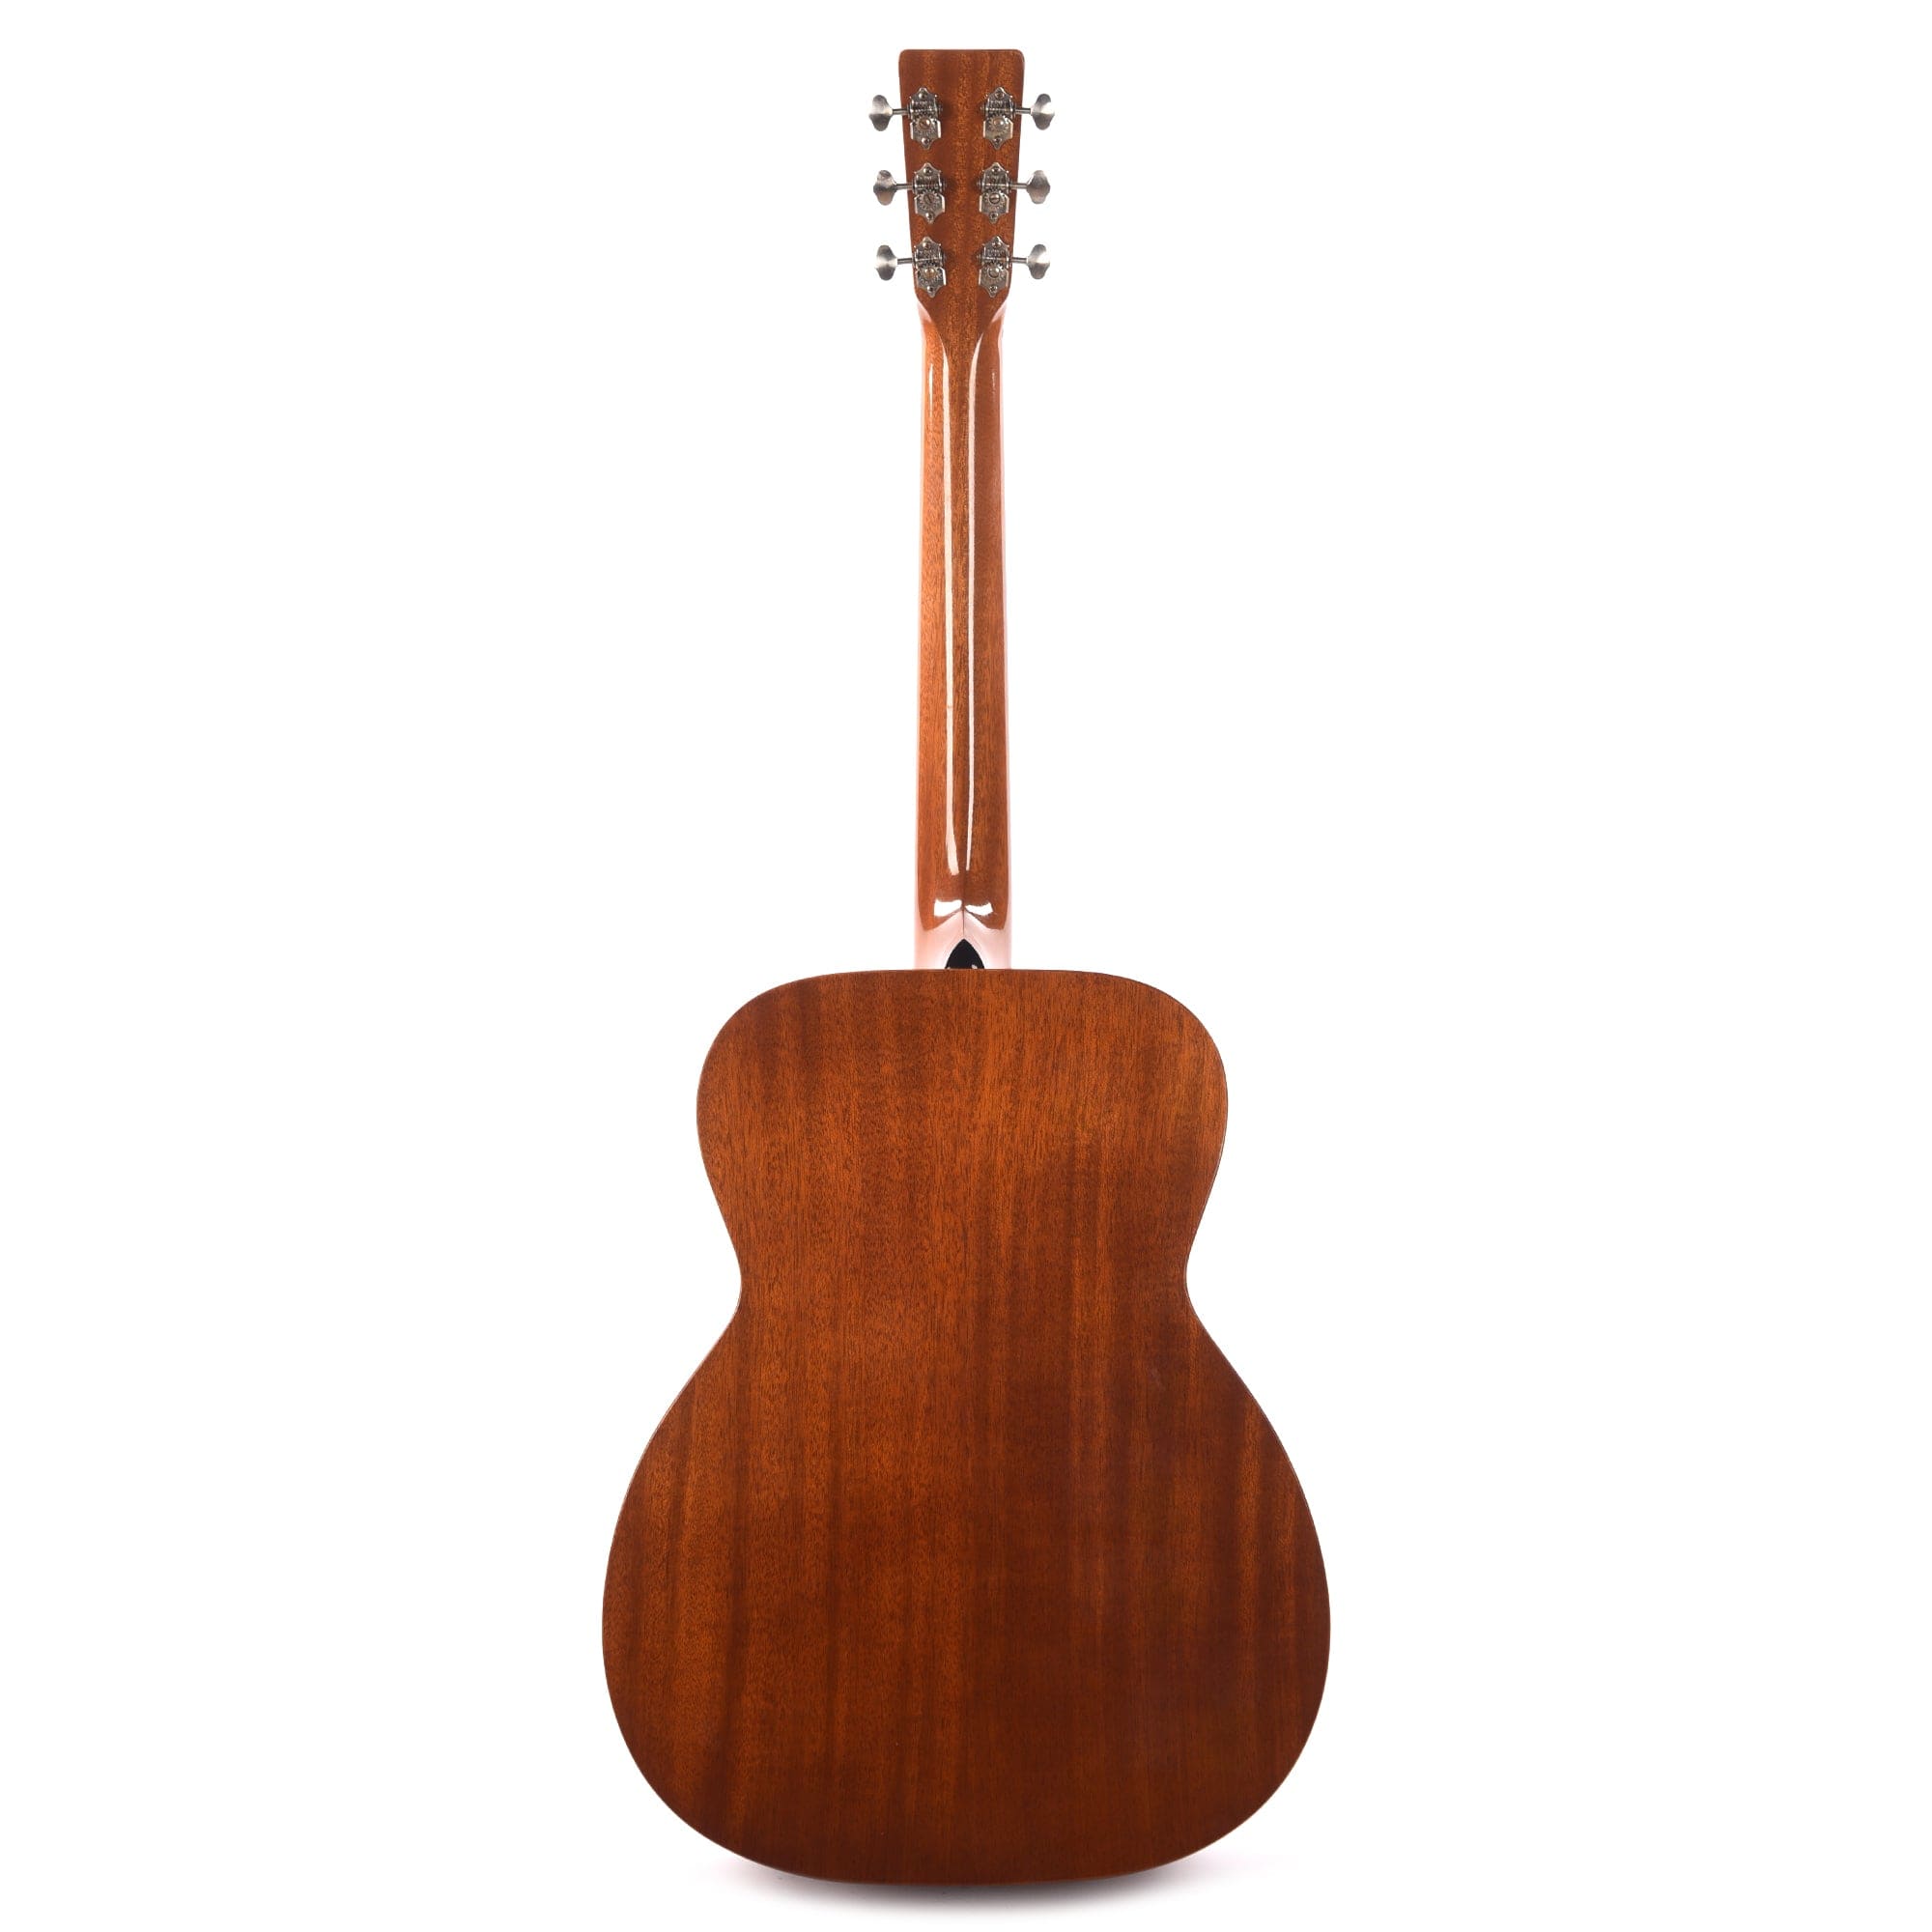 Atkin Dust Bowl 000 Mahogany Natural Acoustic Guitars / OM and Auditorium